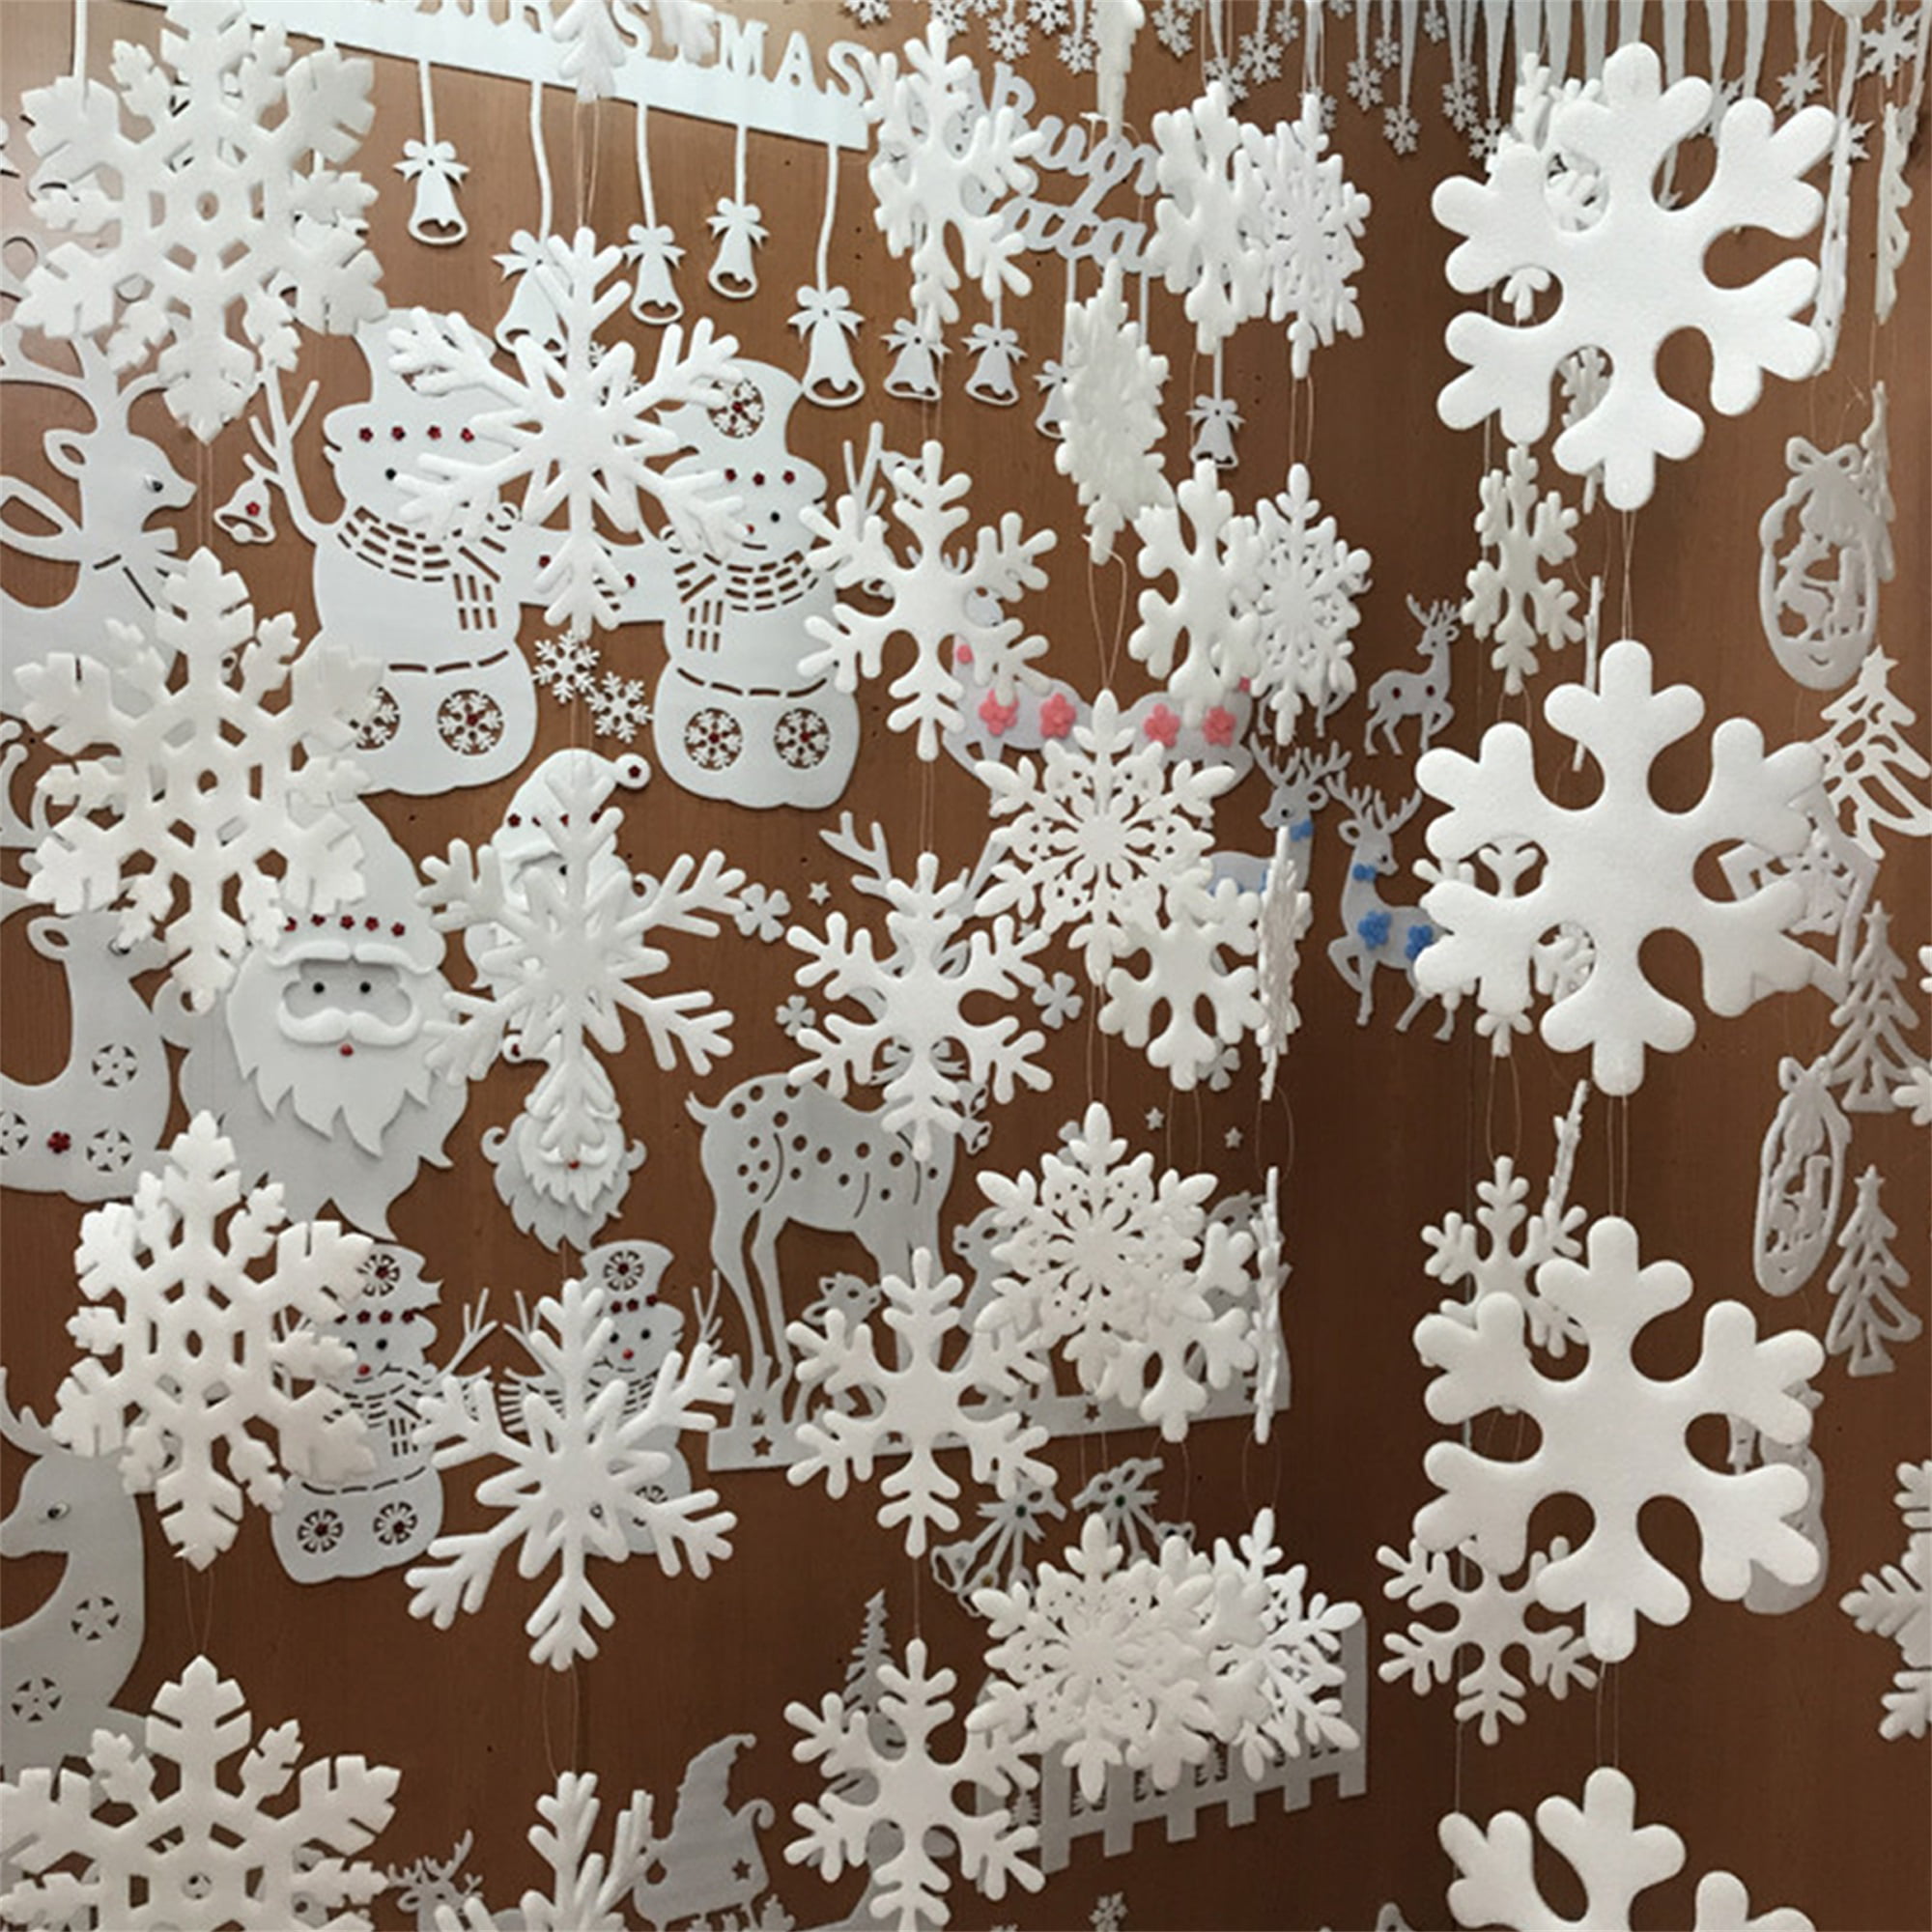 NOLITOY 9 Pcs Foam Christmas Snowflakes Foam Snowflakes Snowflake Shapes  Molds Christmas Snowflake Ornaments Snowflake Table Scatter Snowflake